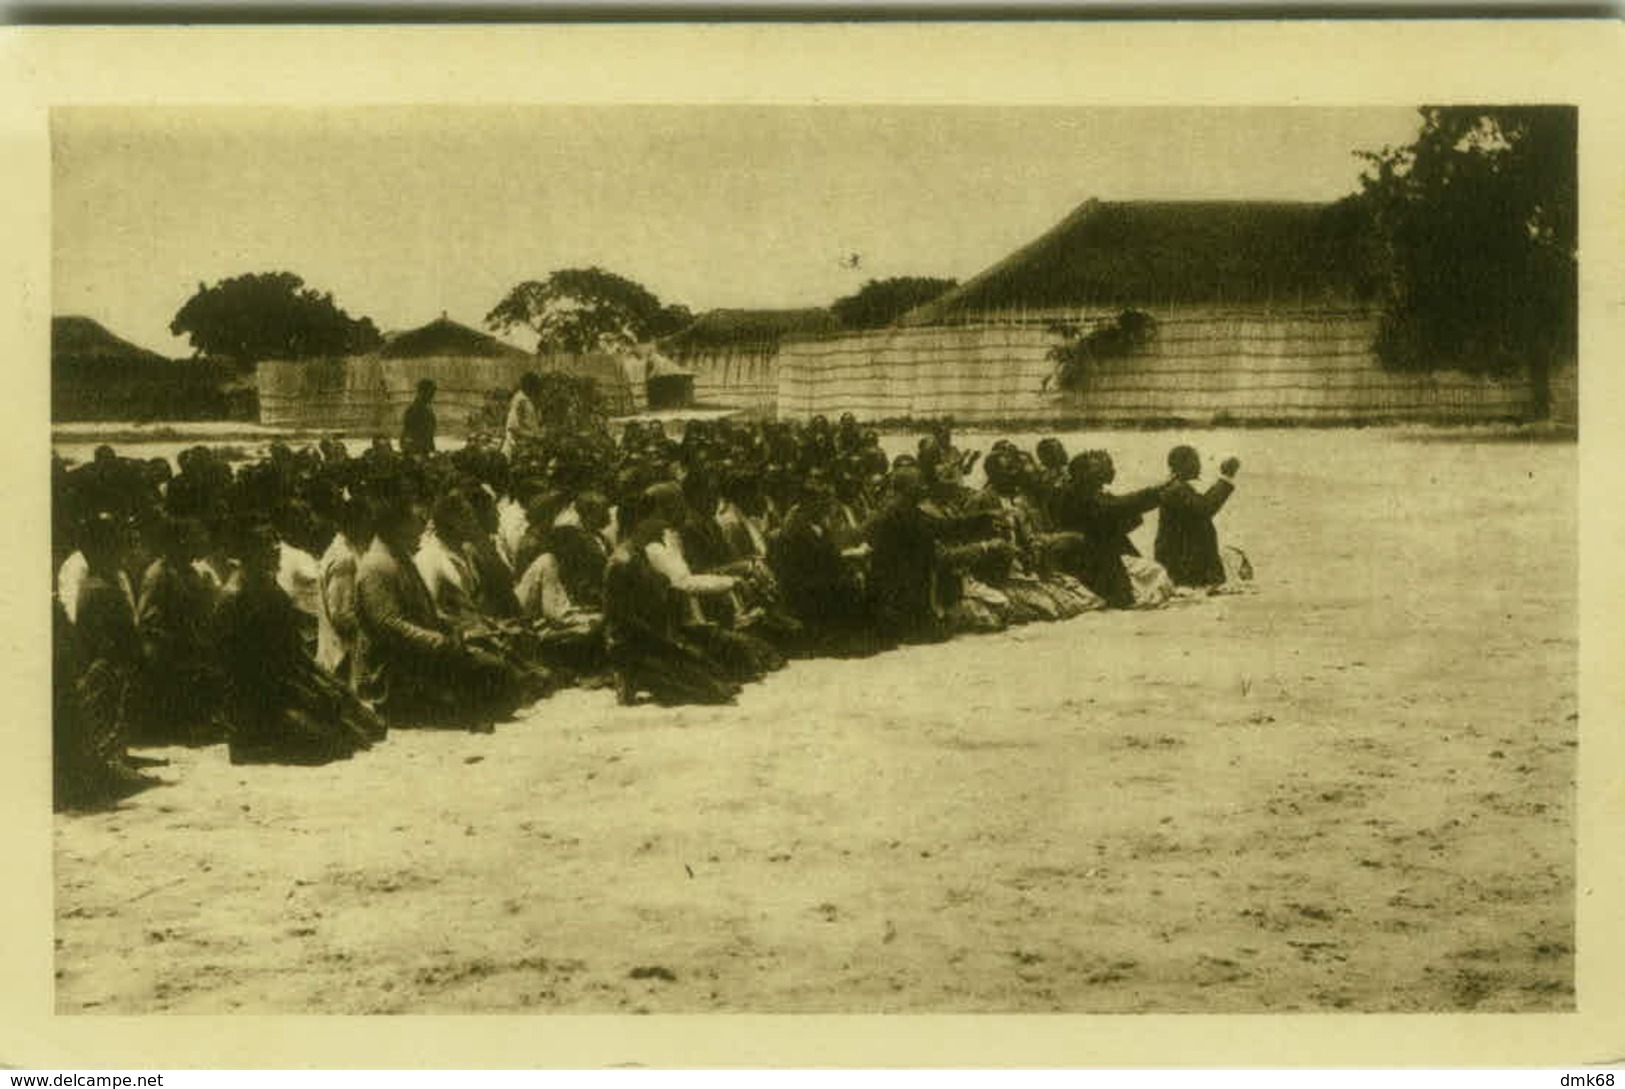 AFRICA - ZAMBIA - LEALUYI - LES CHEFS ET LE NGAMBELA SALUT LA REINE MOKWAE - 1930s (5535) - Zambie